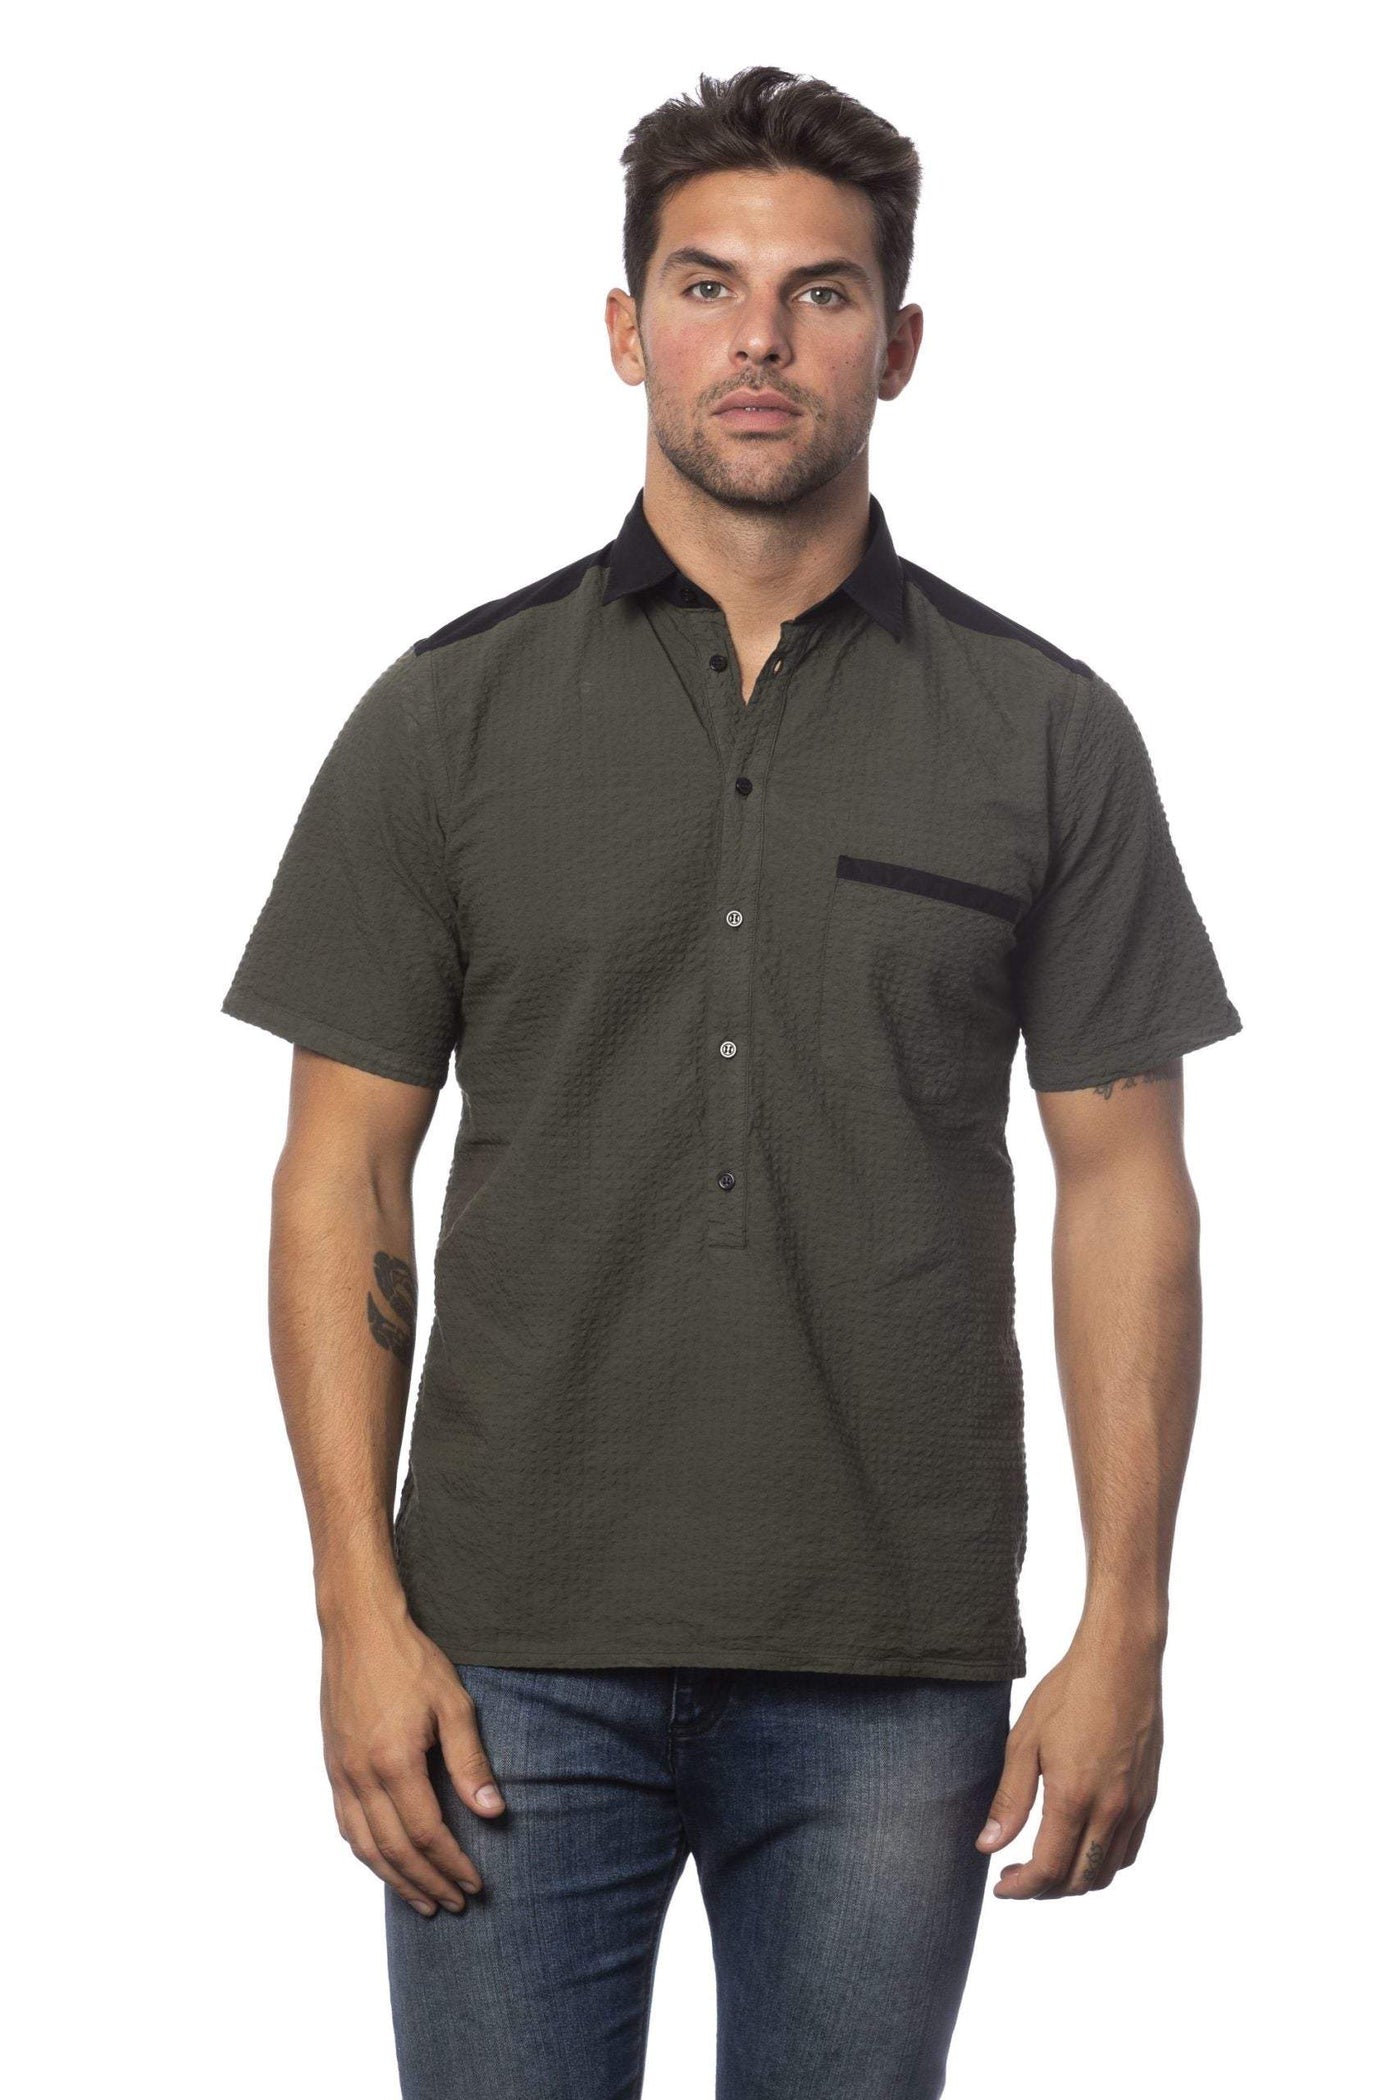 Verri Army Cotton Shirt #men, Army, feed-1, IT40 | M, IT41 | L, Shirts - Men - Clothing, Verri at SEYMAYKA